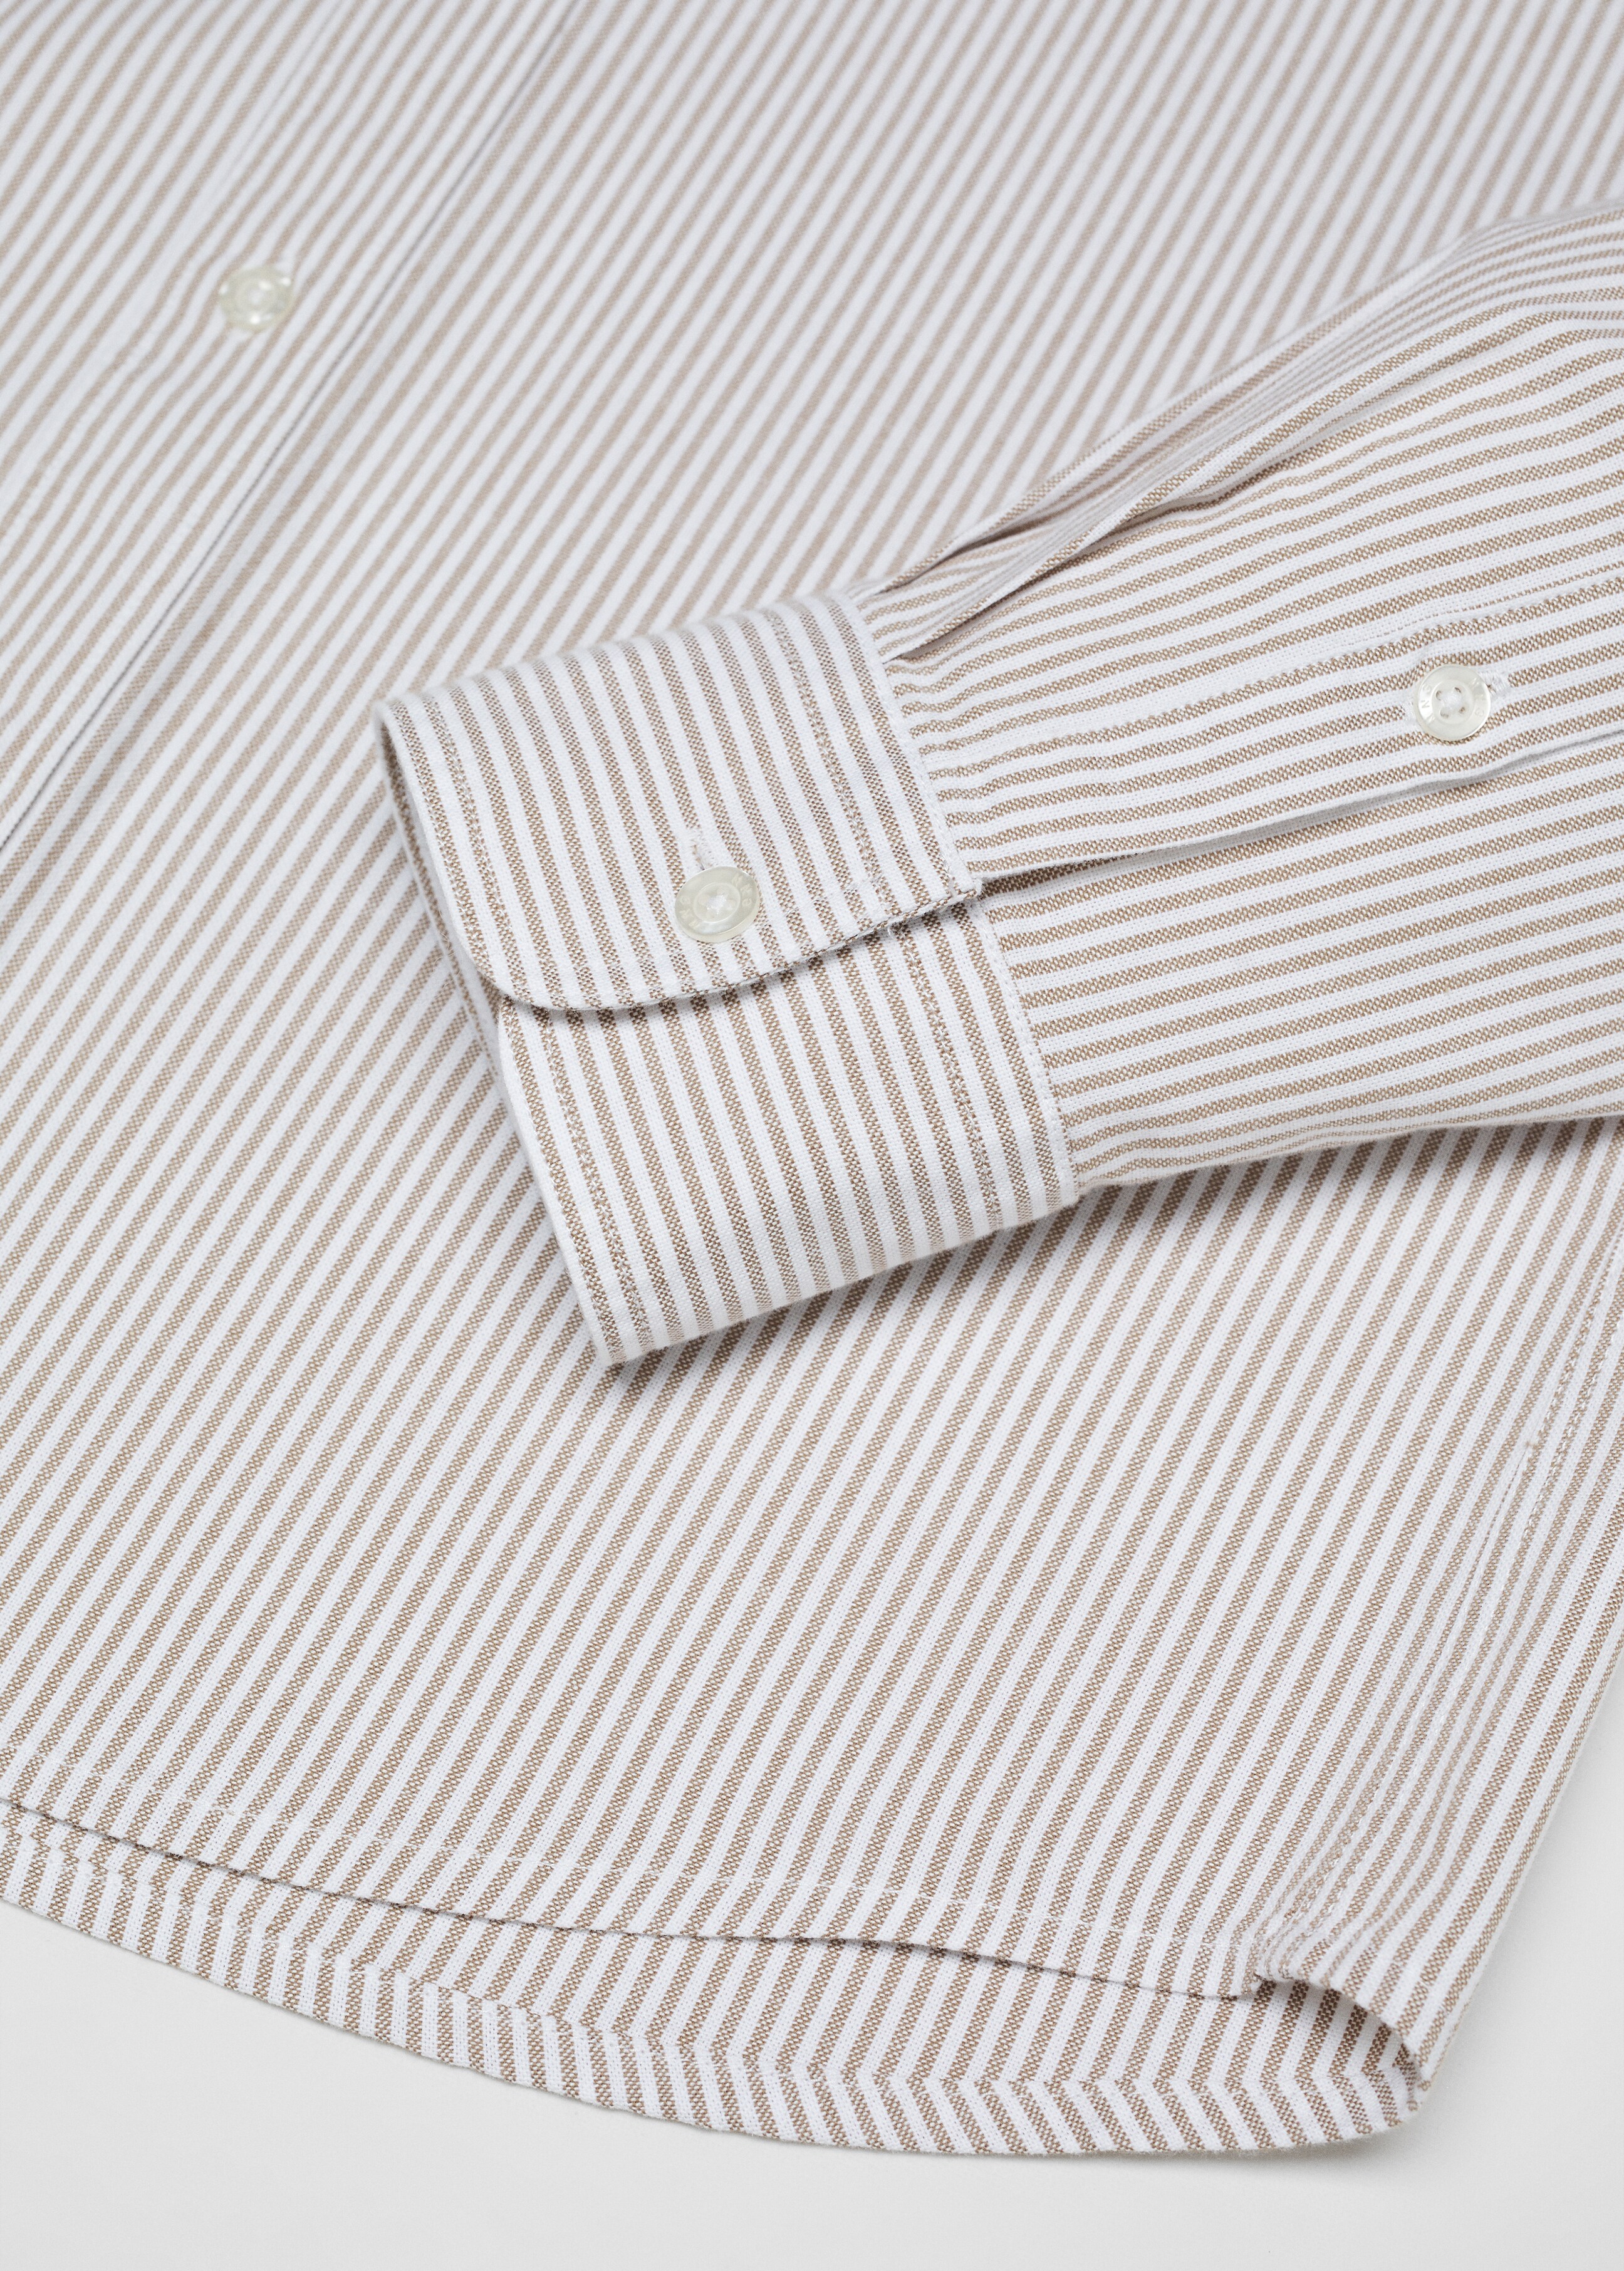 100% cotton kodak striped shirt - Details of the article 8